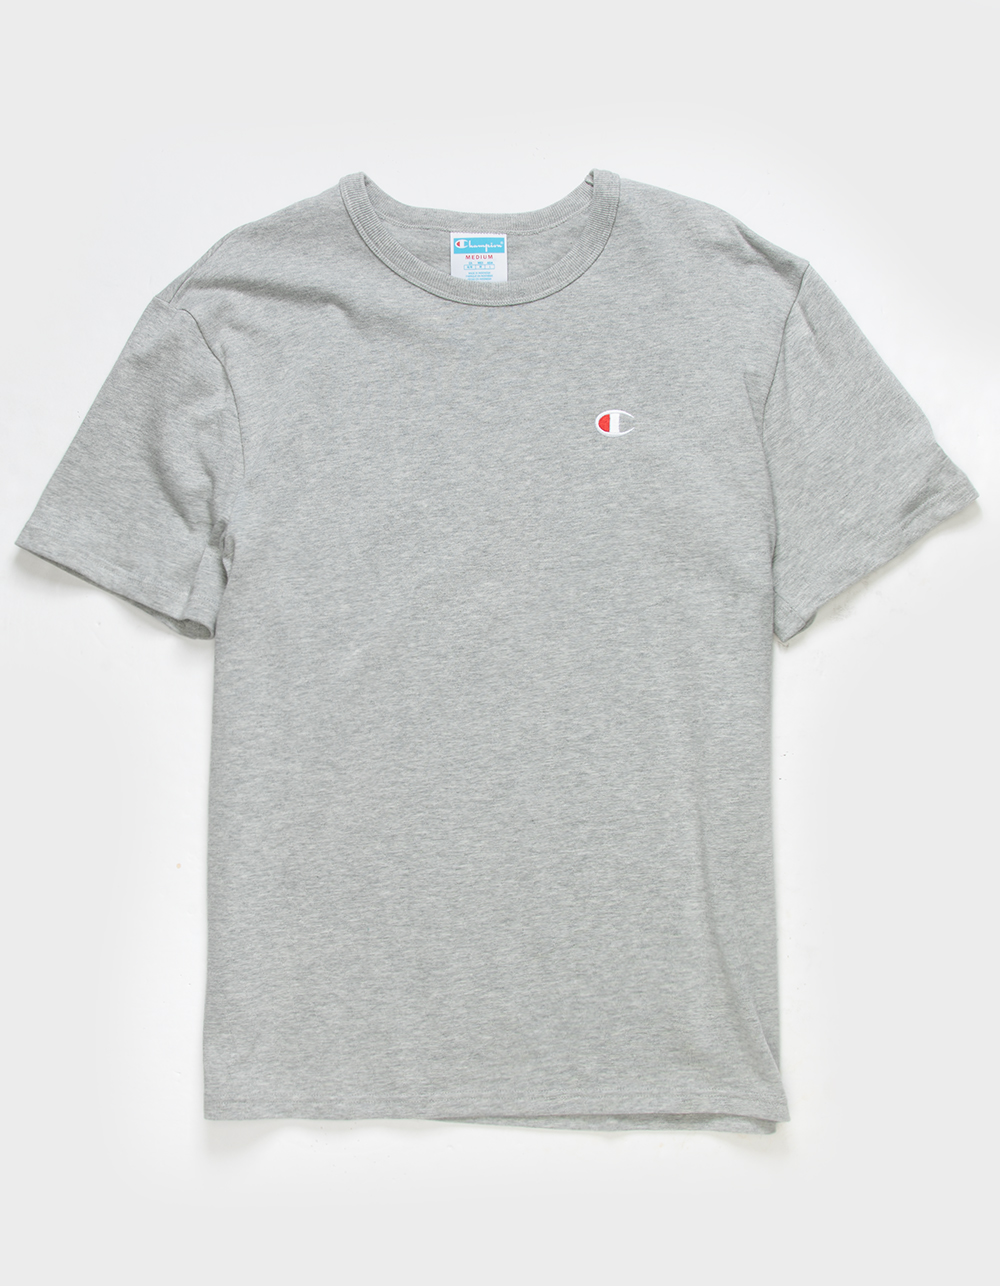 Men's T-Shirts: Sport, Graphic & Long Sleeve T-Shirts